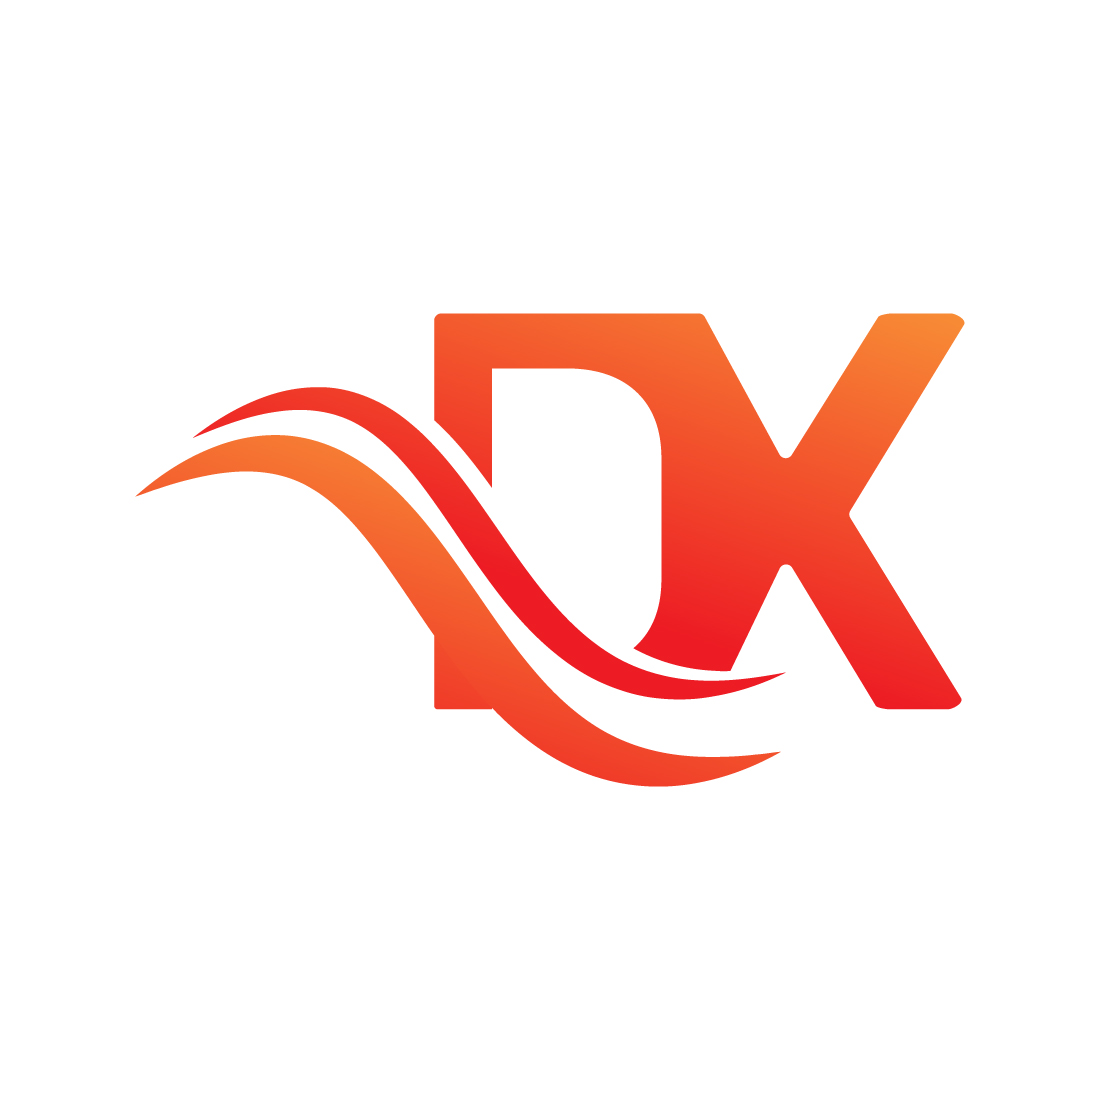 Initials DX letters logo design vector images DX logo template icon orange color logo design XD logo Premium vector best company identity preview image.